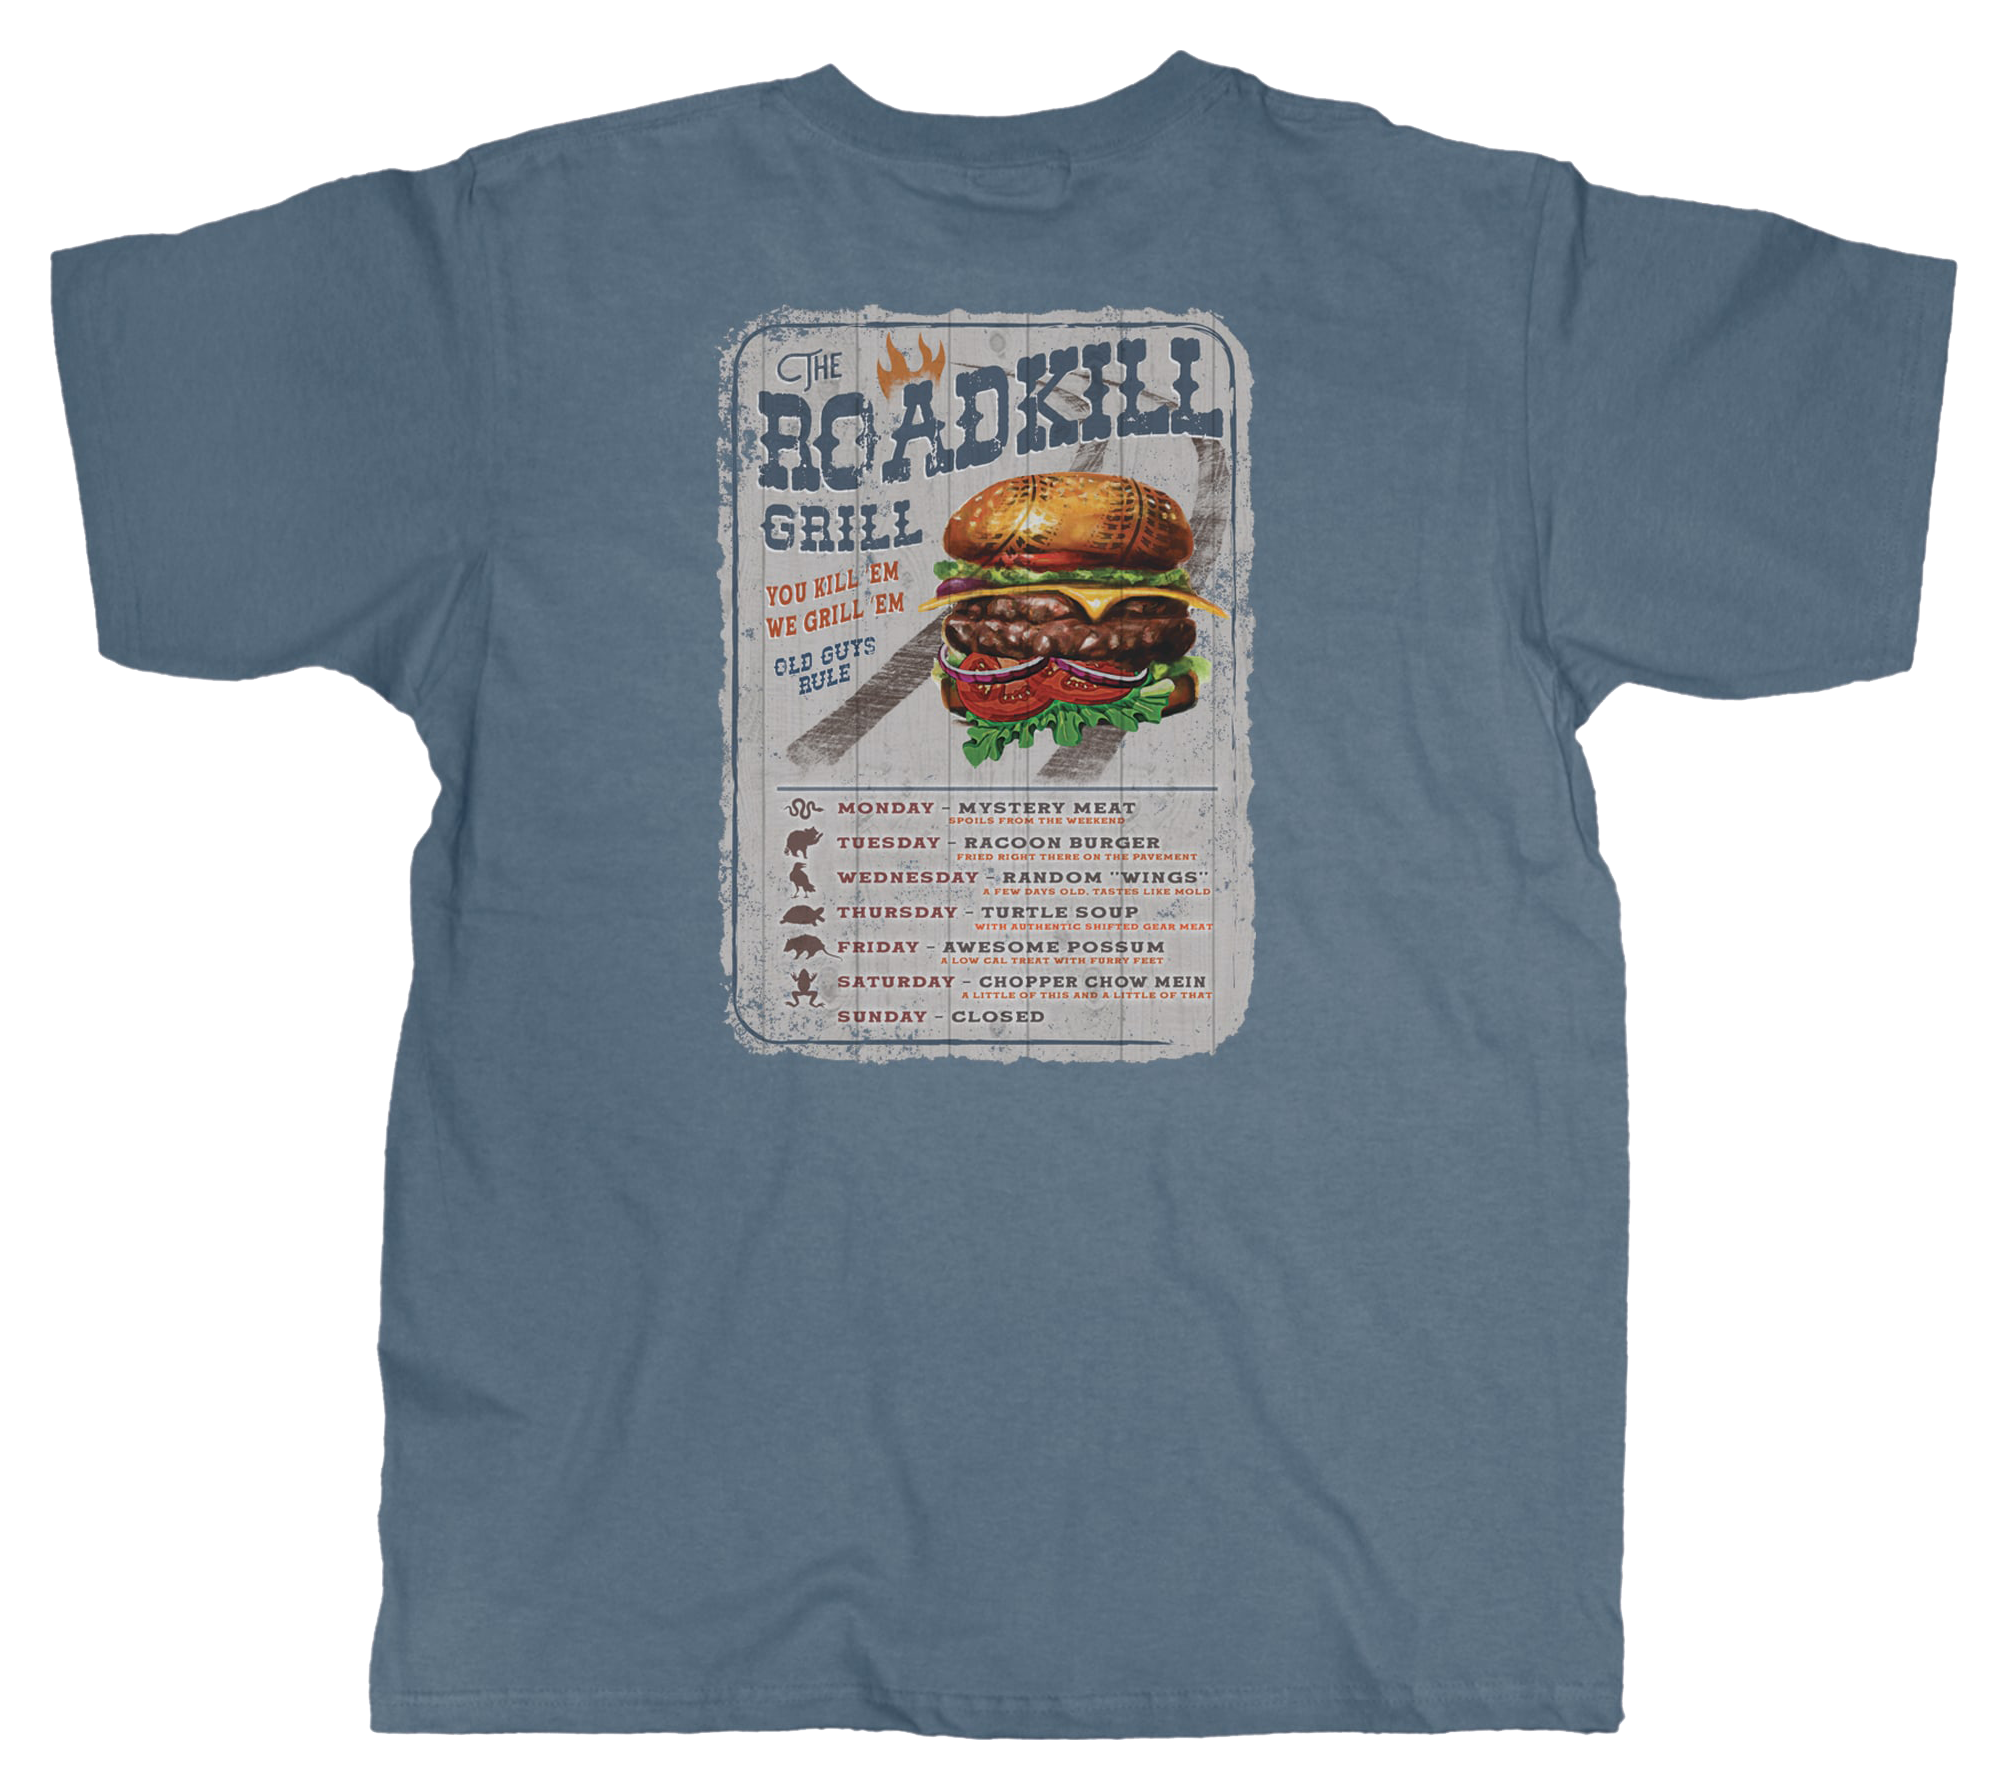 Old Guys Rule Roadkill Grill Short-Sleeve T-Shirt for Men